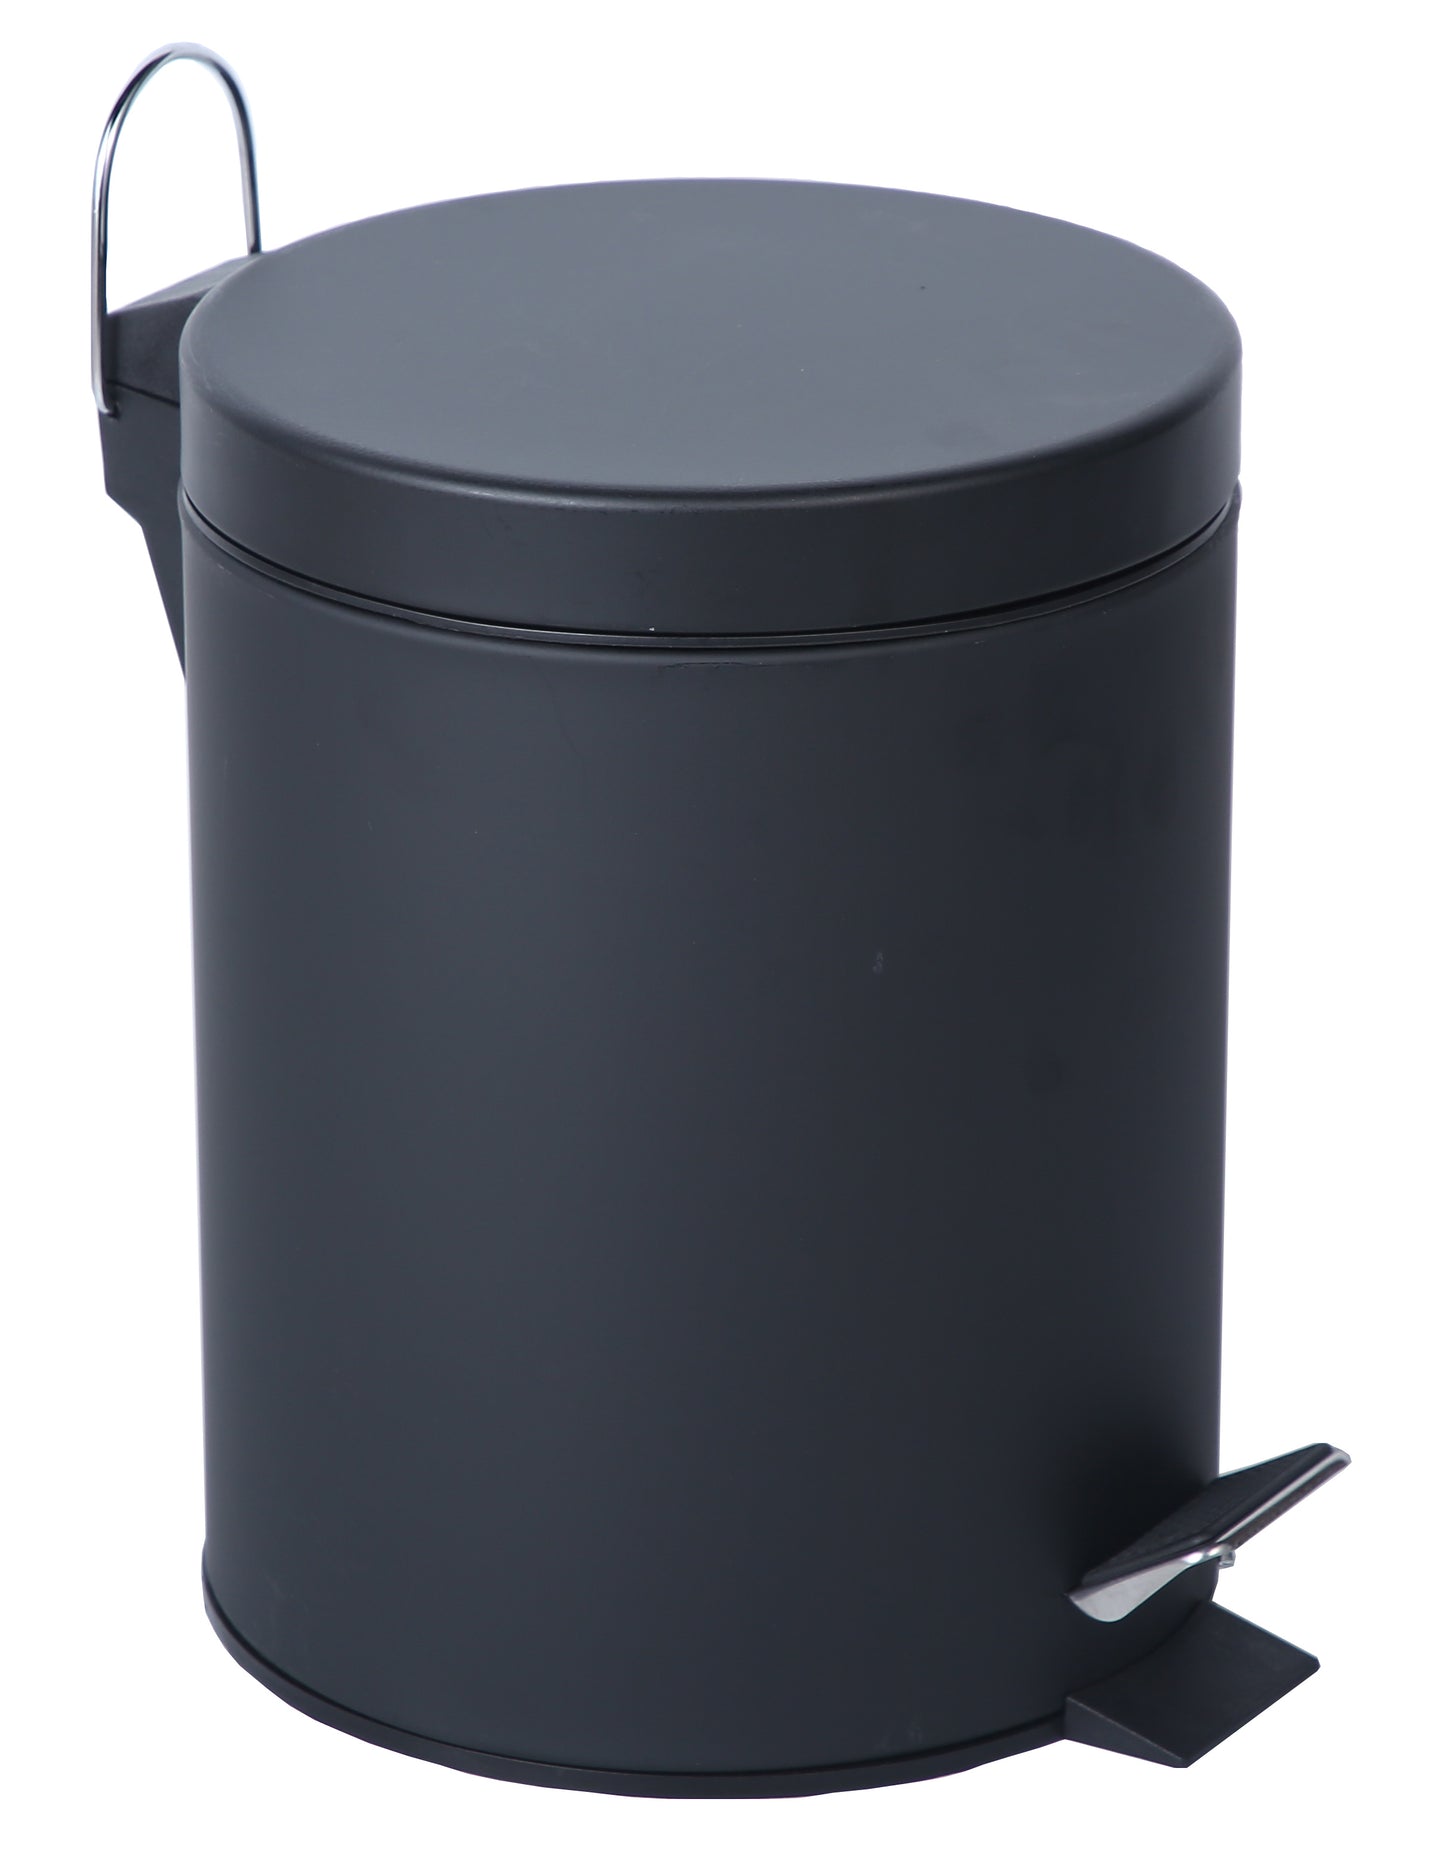 Buckingham Black Powder Coated Pedal Bin Waste Trash Bin for Bathroom Kitchen Office 5 Litres